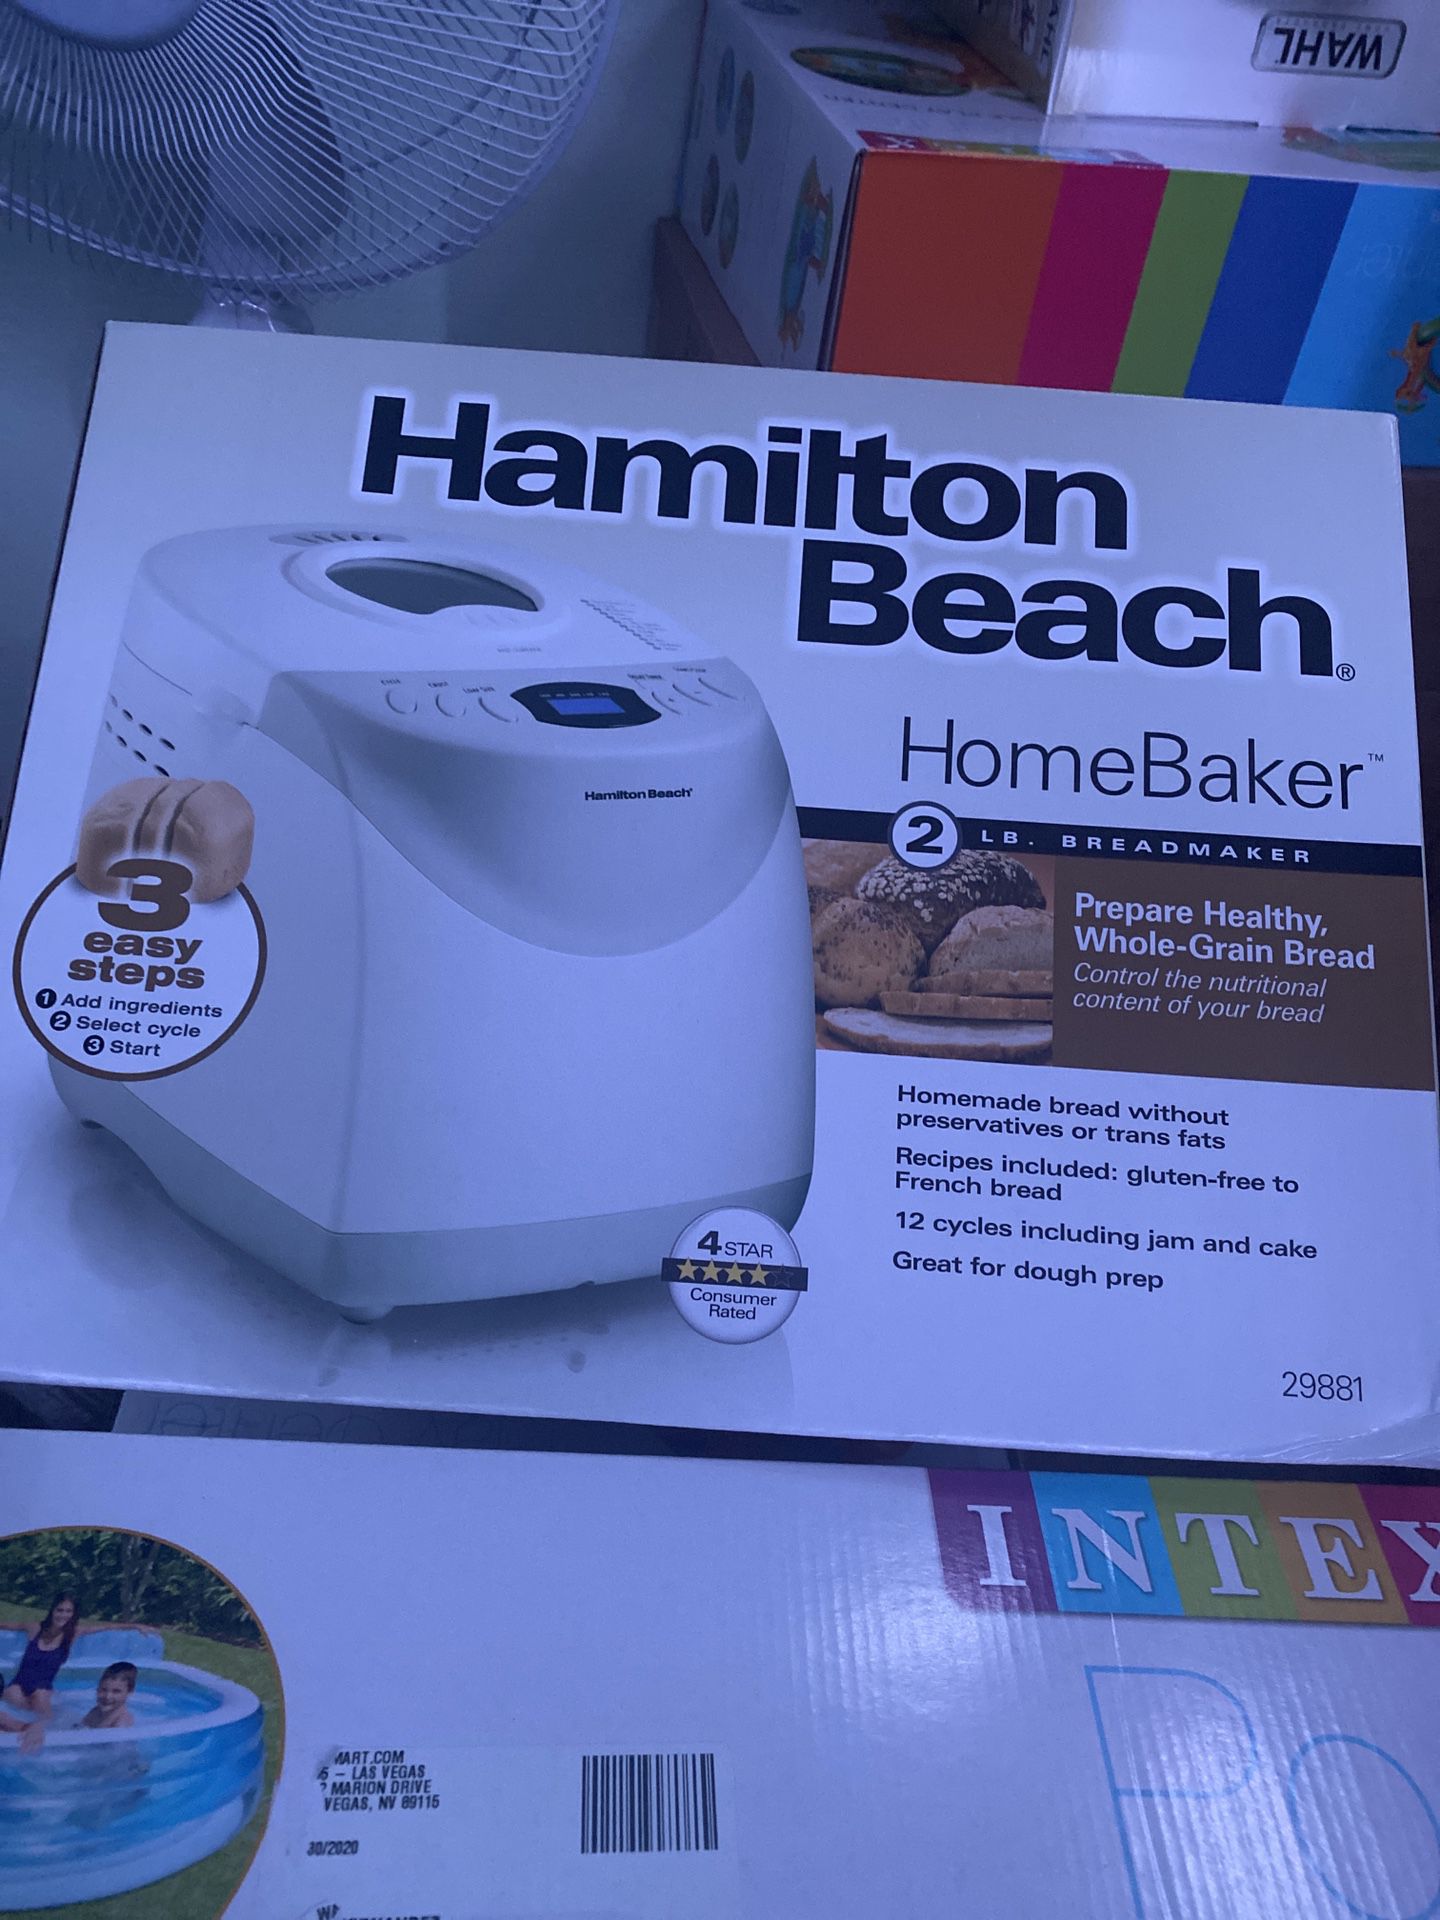 NEW Hamilton Beach 2 lb Digital Bread Maker Model #29881